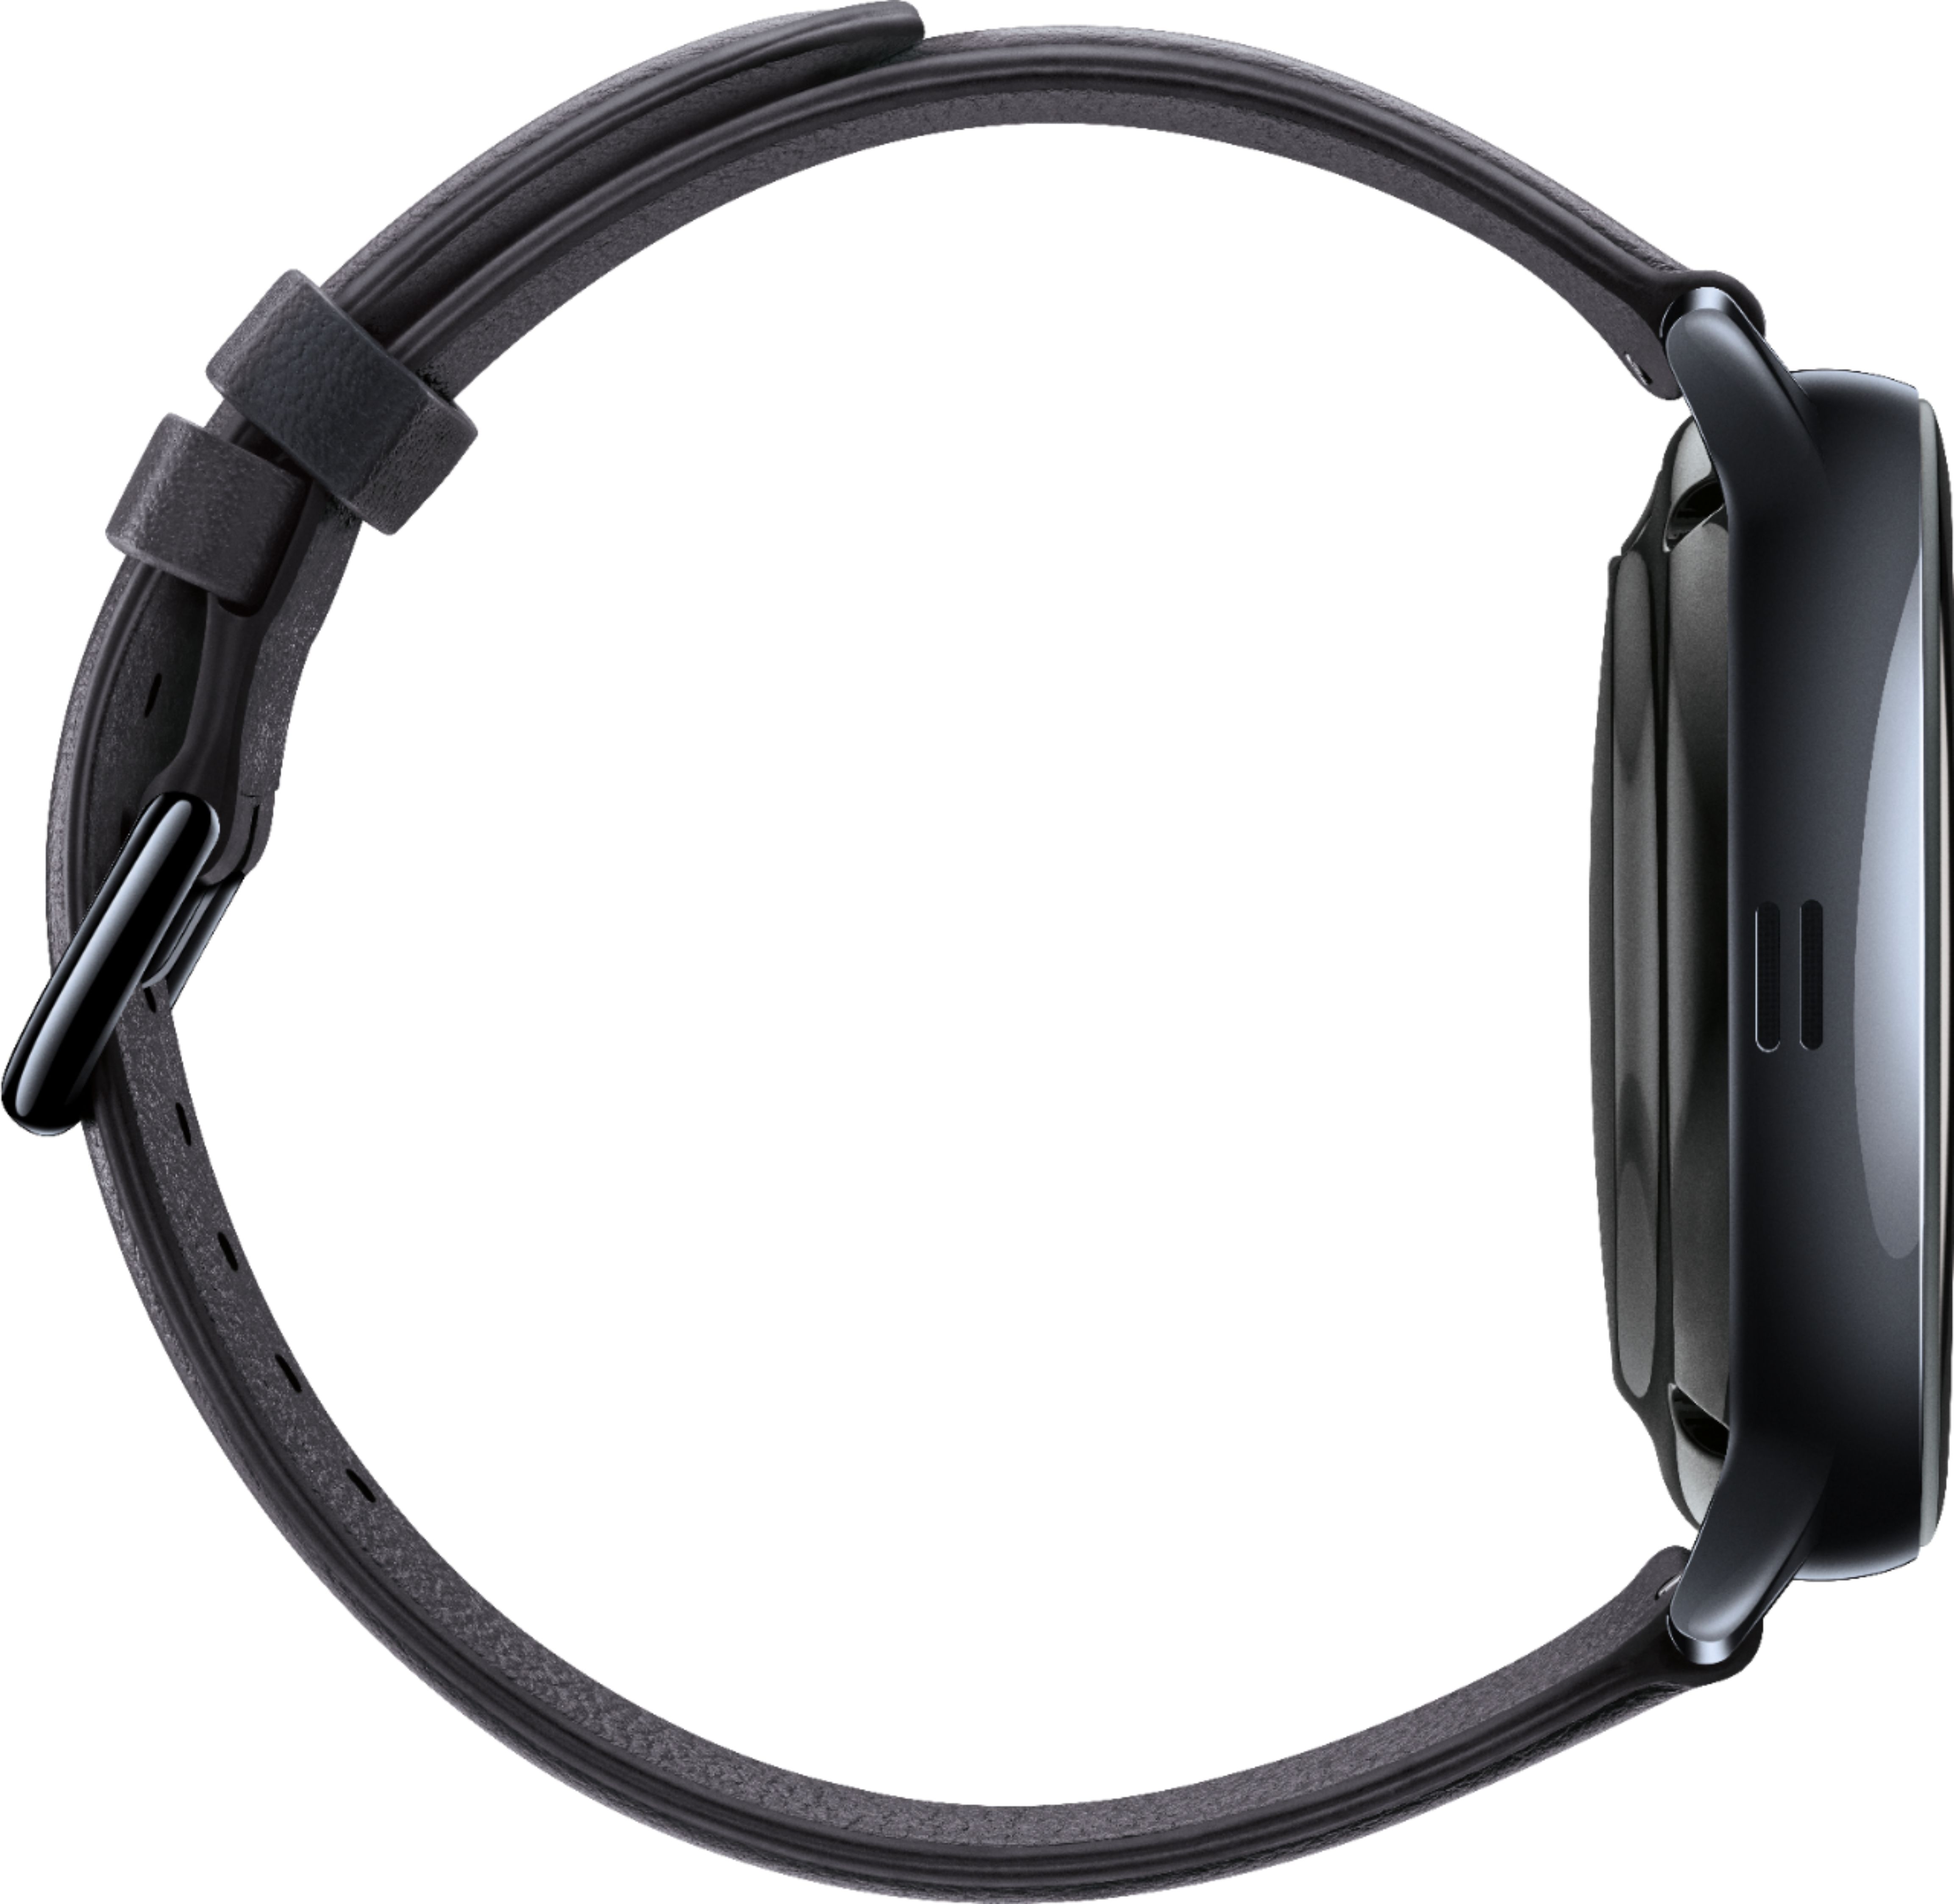 Galaxy Watch Active2 (44mm), Aqua Black (Bluetooth) Wearables -  SM-R820NZKAXAR